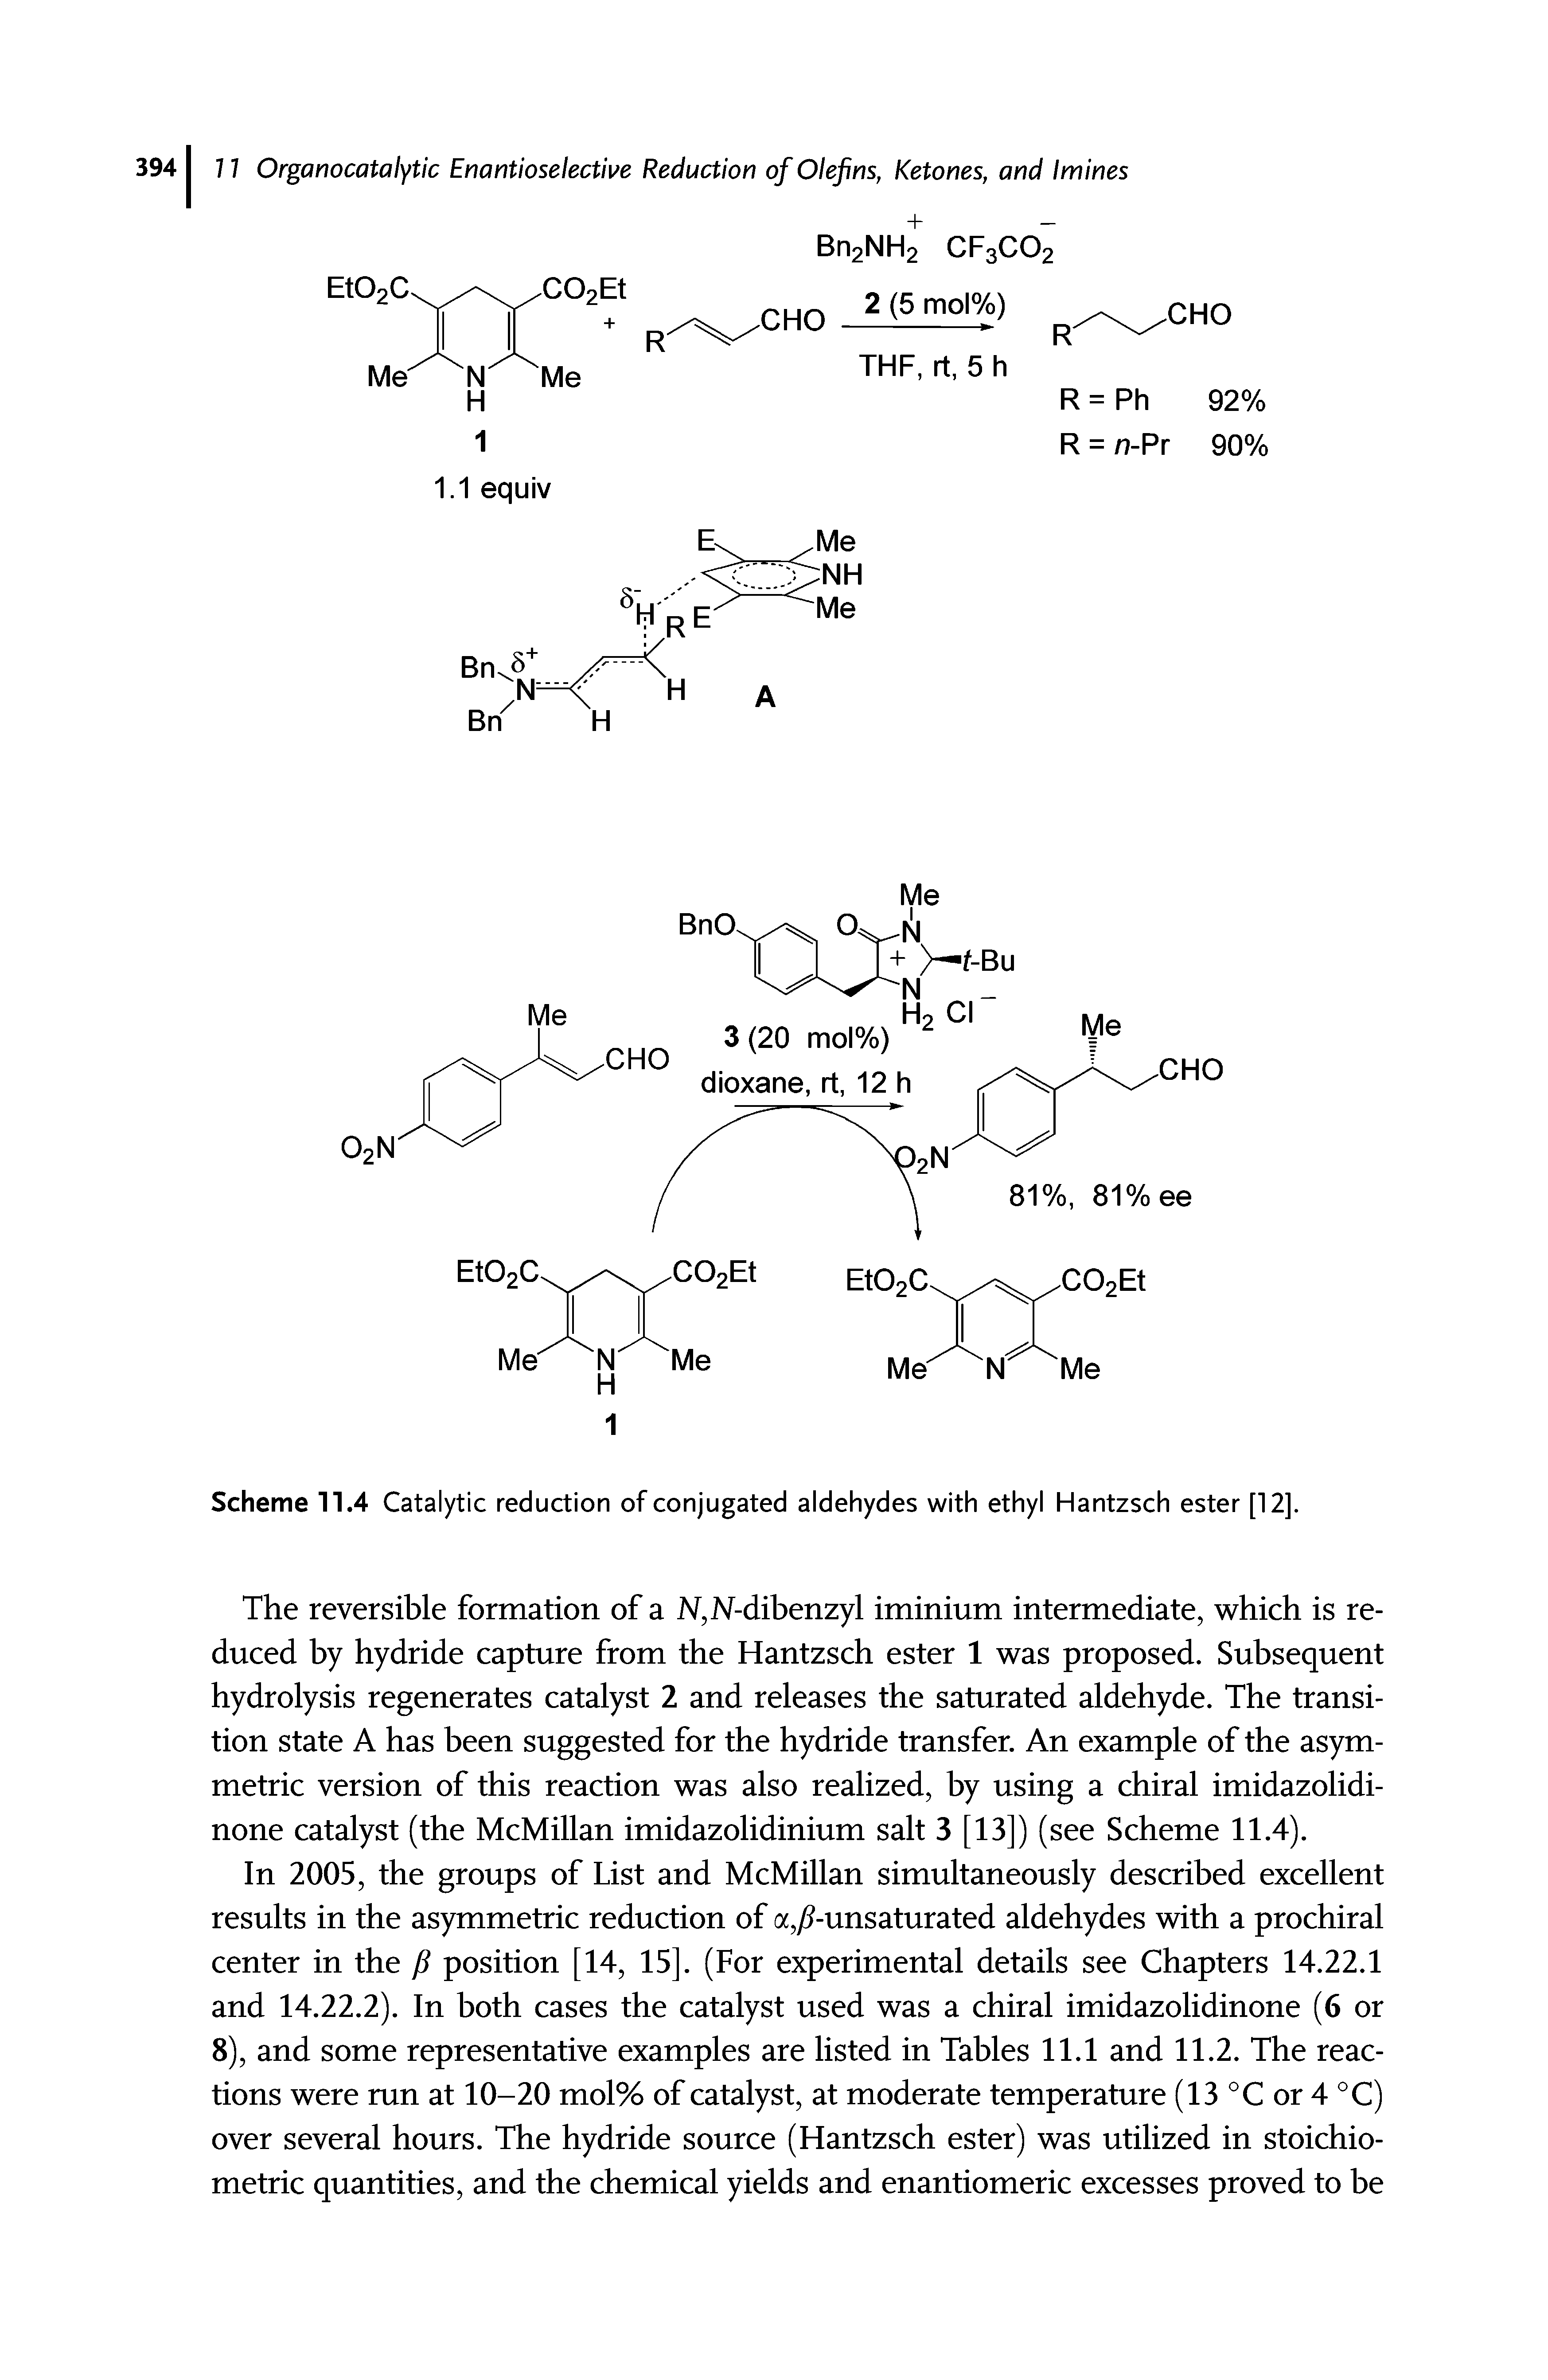 Scheme 11.4 Catalytic reduction of conjugated aldehydes with ethyl Flantzsch ester [12].